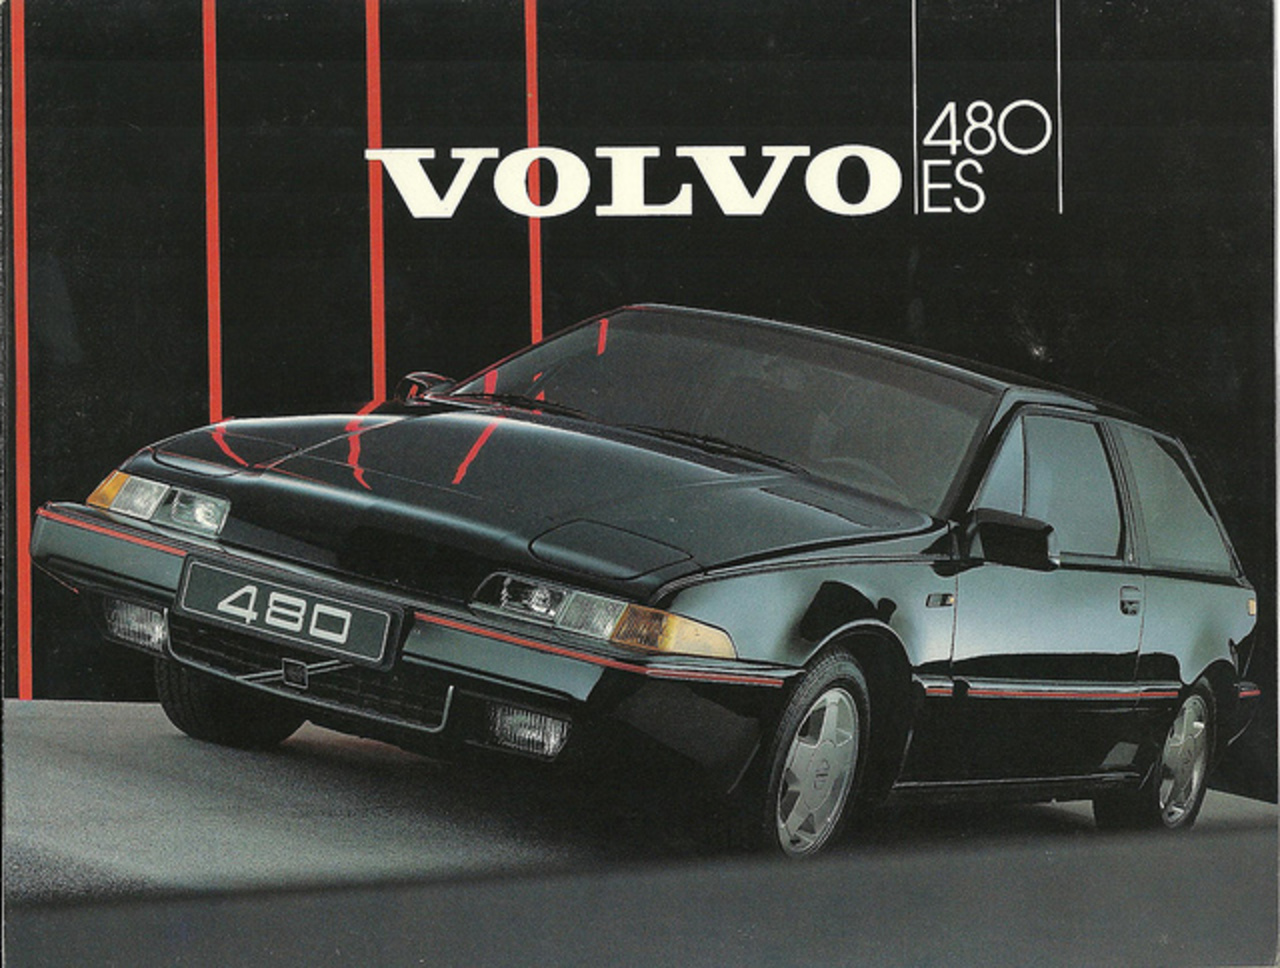 Volvo 480 es 1987 | Flickr - Photo Sharing!